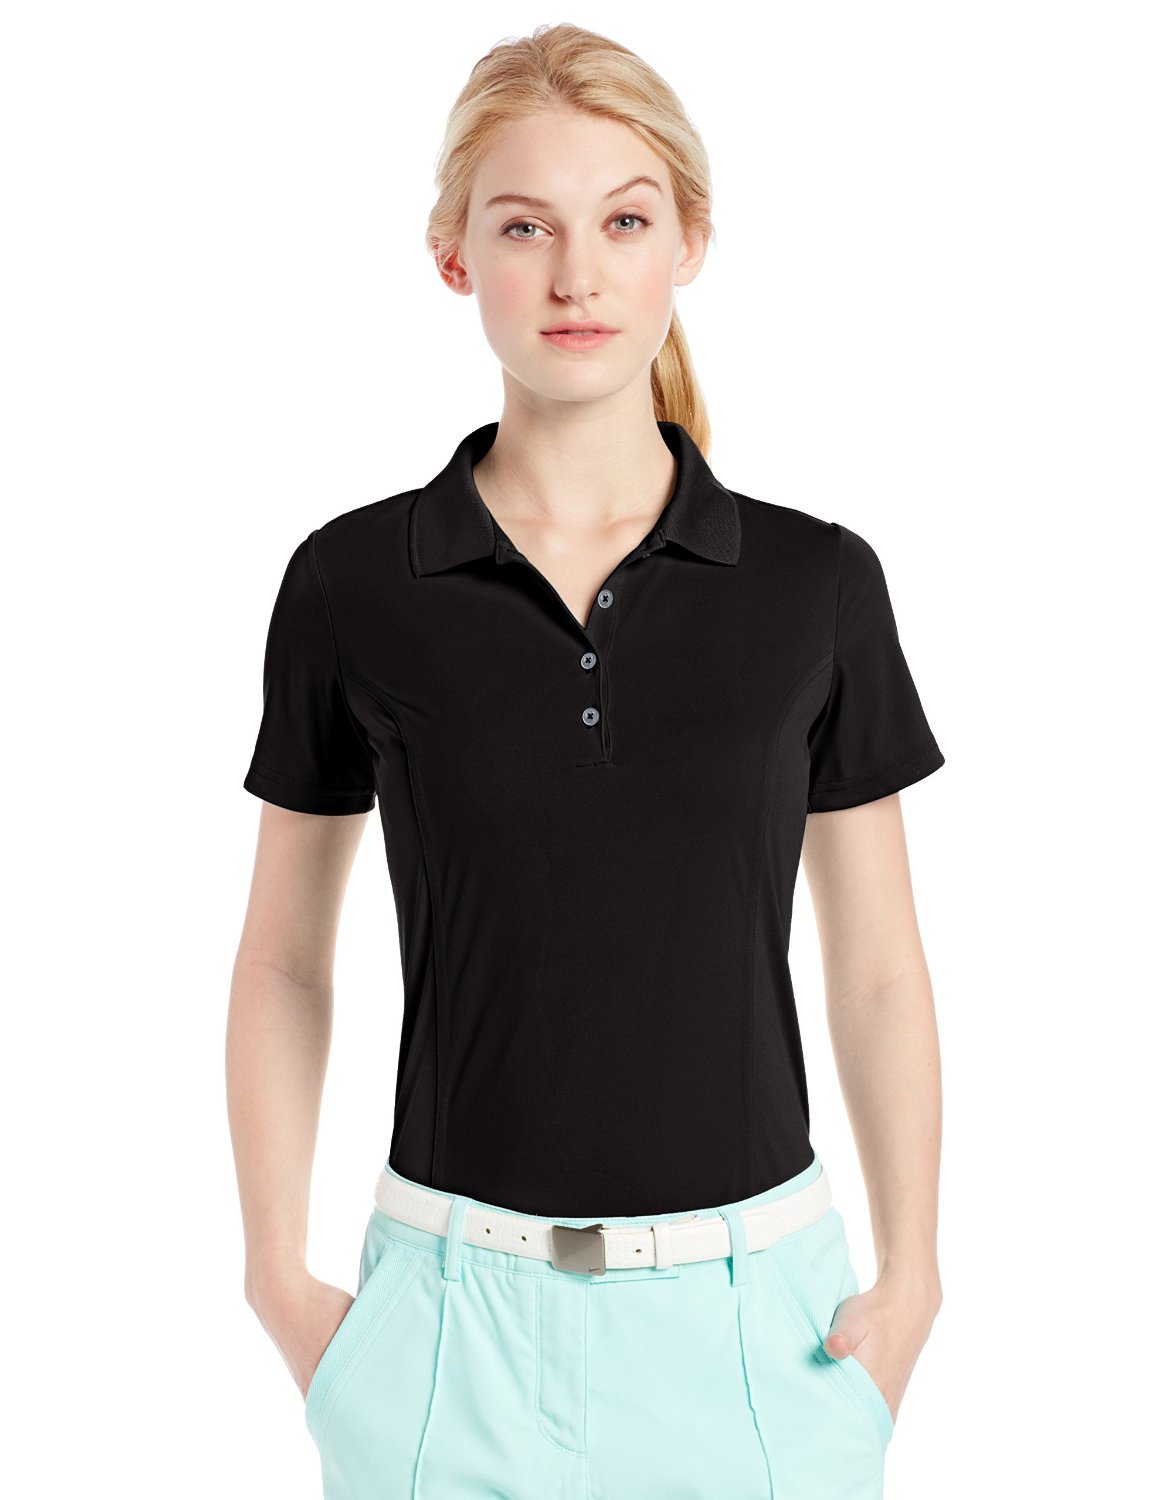 Adidas Puremotion Solid Jersey Golf Polo Shirts